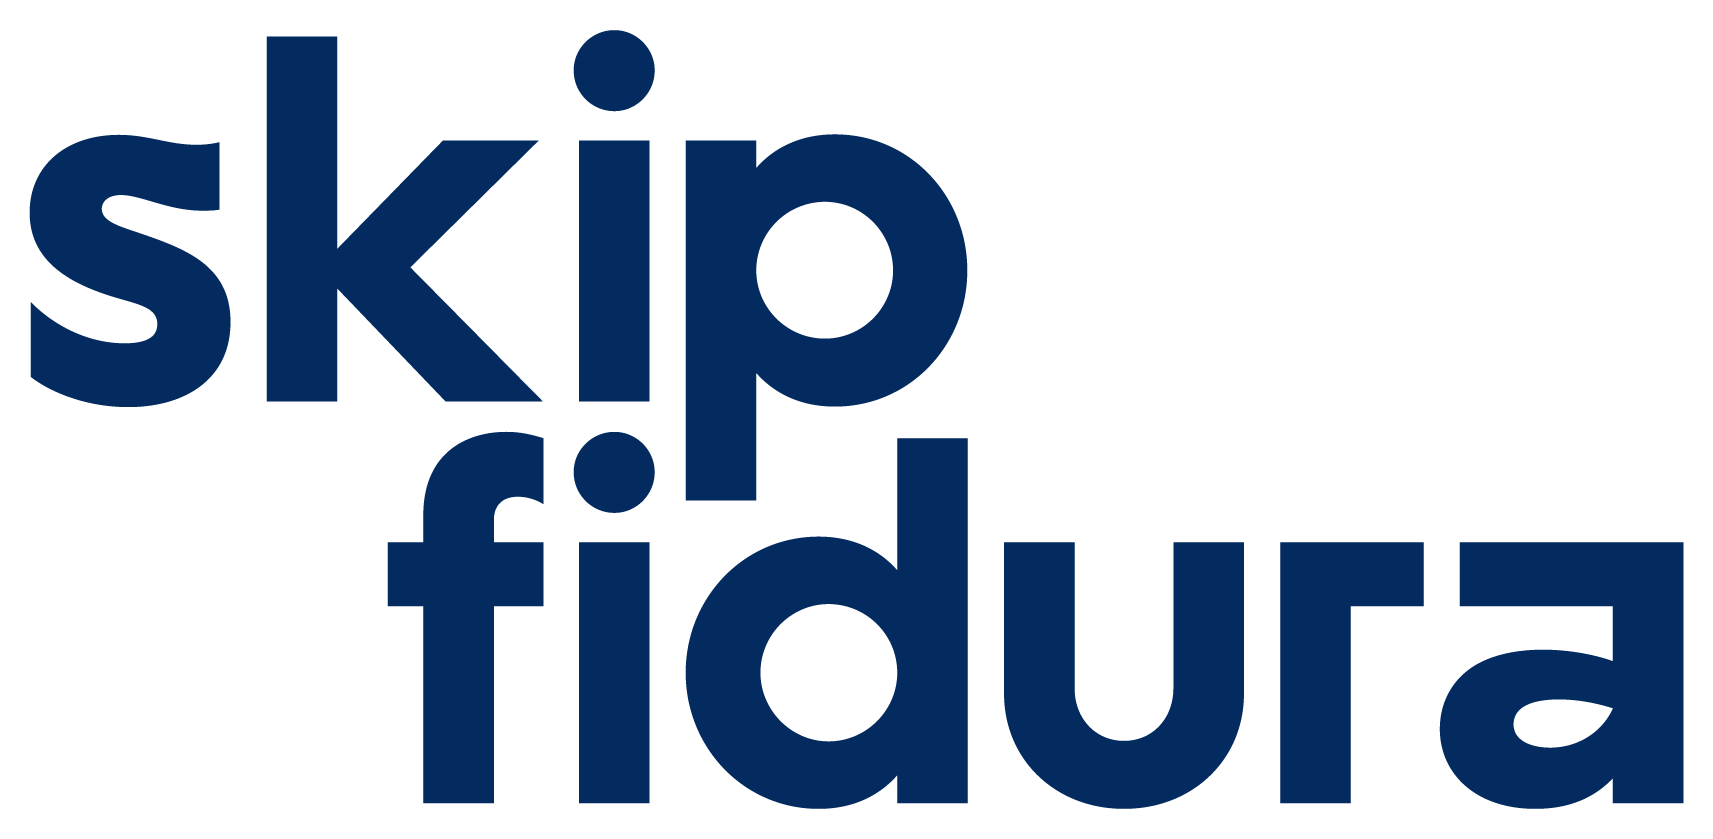 Skip Fidura